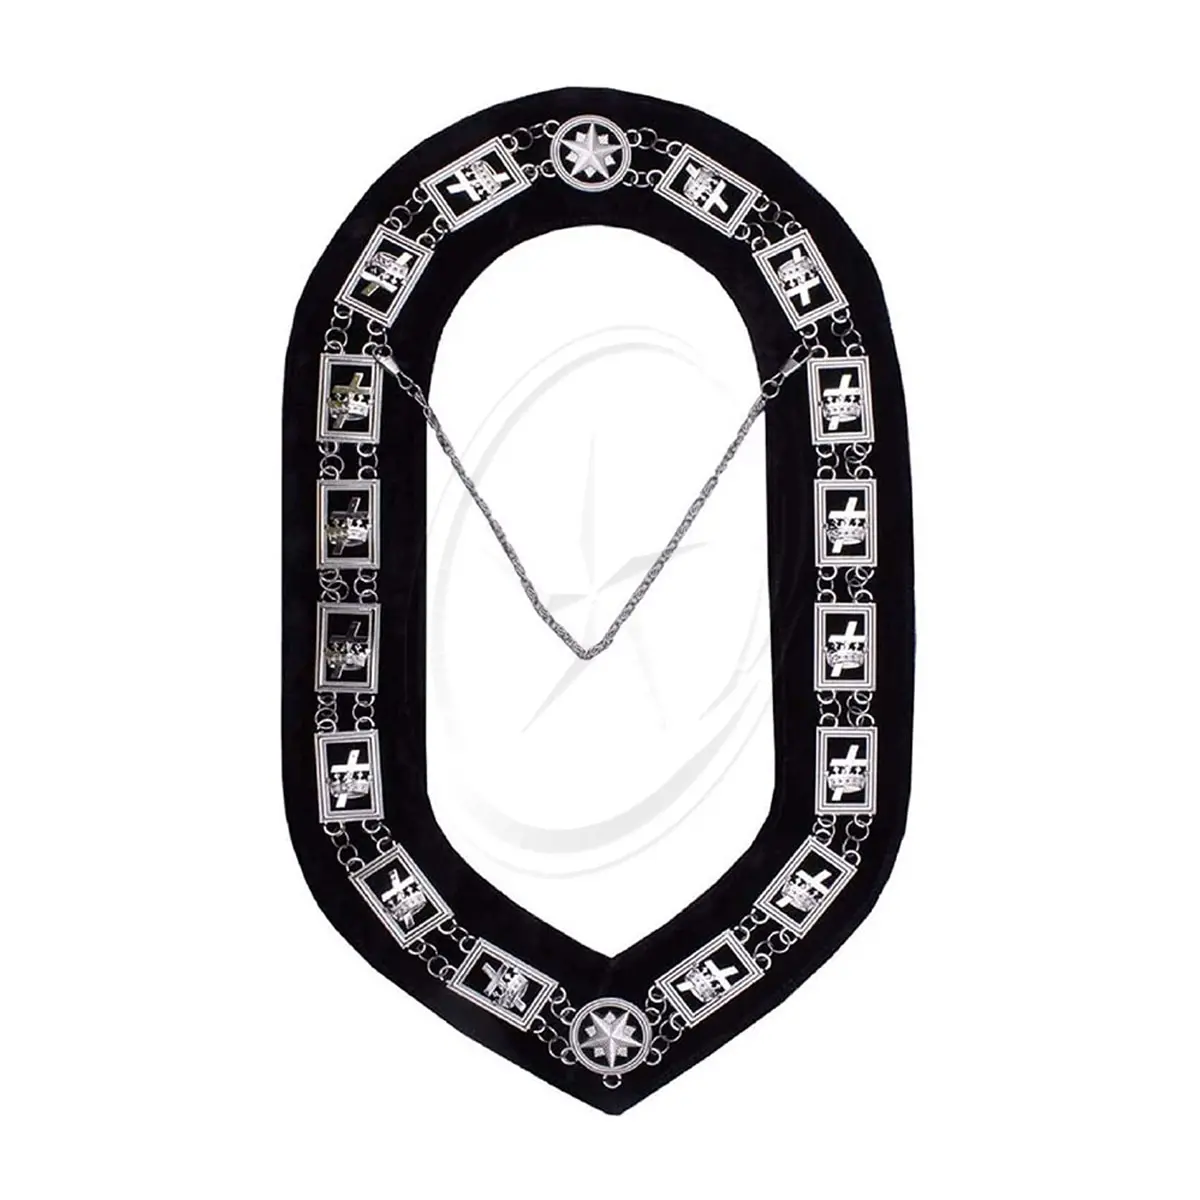 Mason Chain Collar Masonic Regalia Collar Knights Templar - Masonic Chain Collar - GoldSilver on Black (Silver)